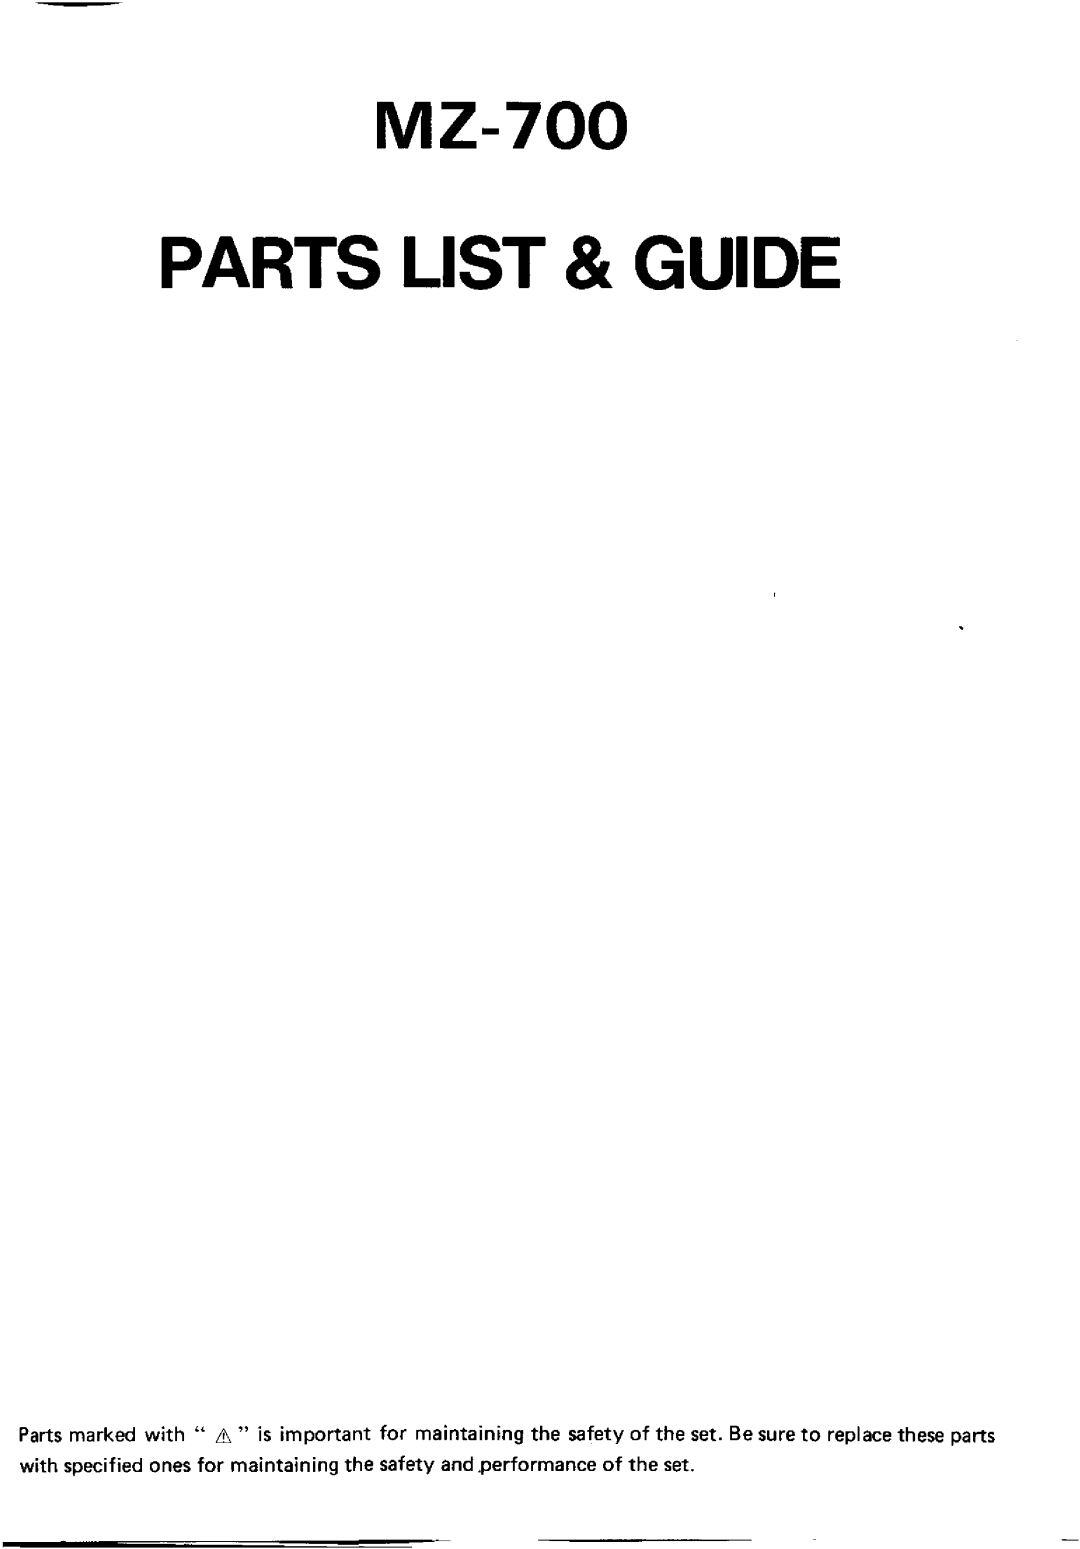 Sharp manual MZ-700 PARTS LIST & GUIDE 